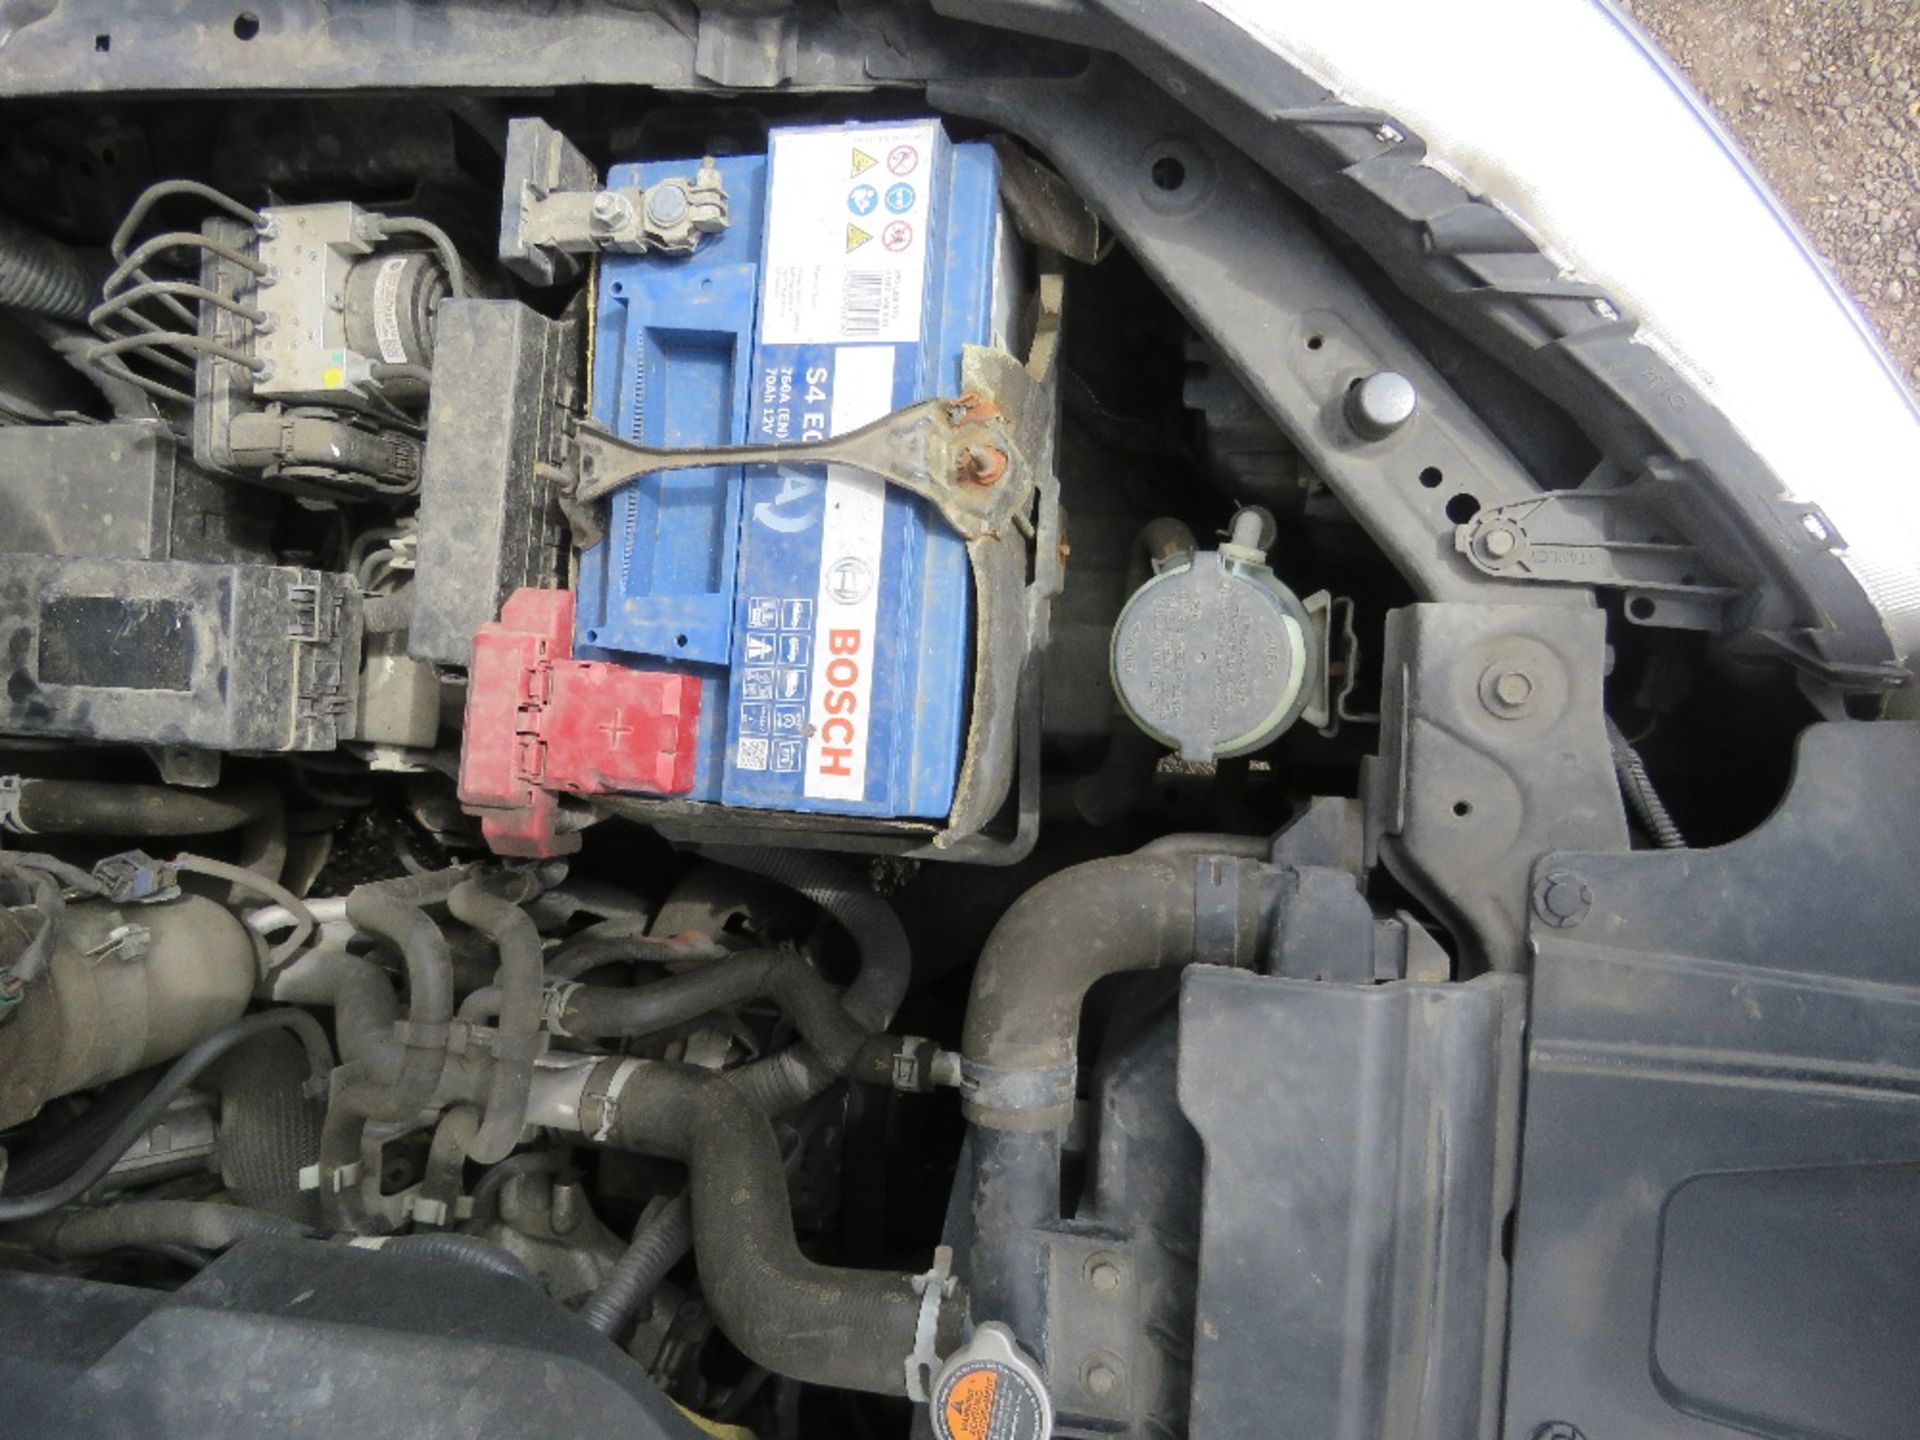 NISSAN NAVARA TEKNA DCI 4WD DOUBLE CAB PICKUP TRUCK REG: EU18 VWM. 113,915 REC MILES. WITH V5. TESTE - Image 21 of 21